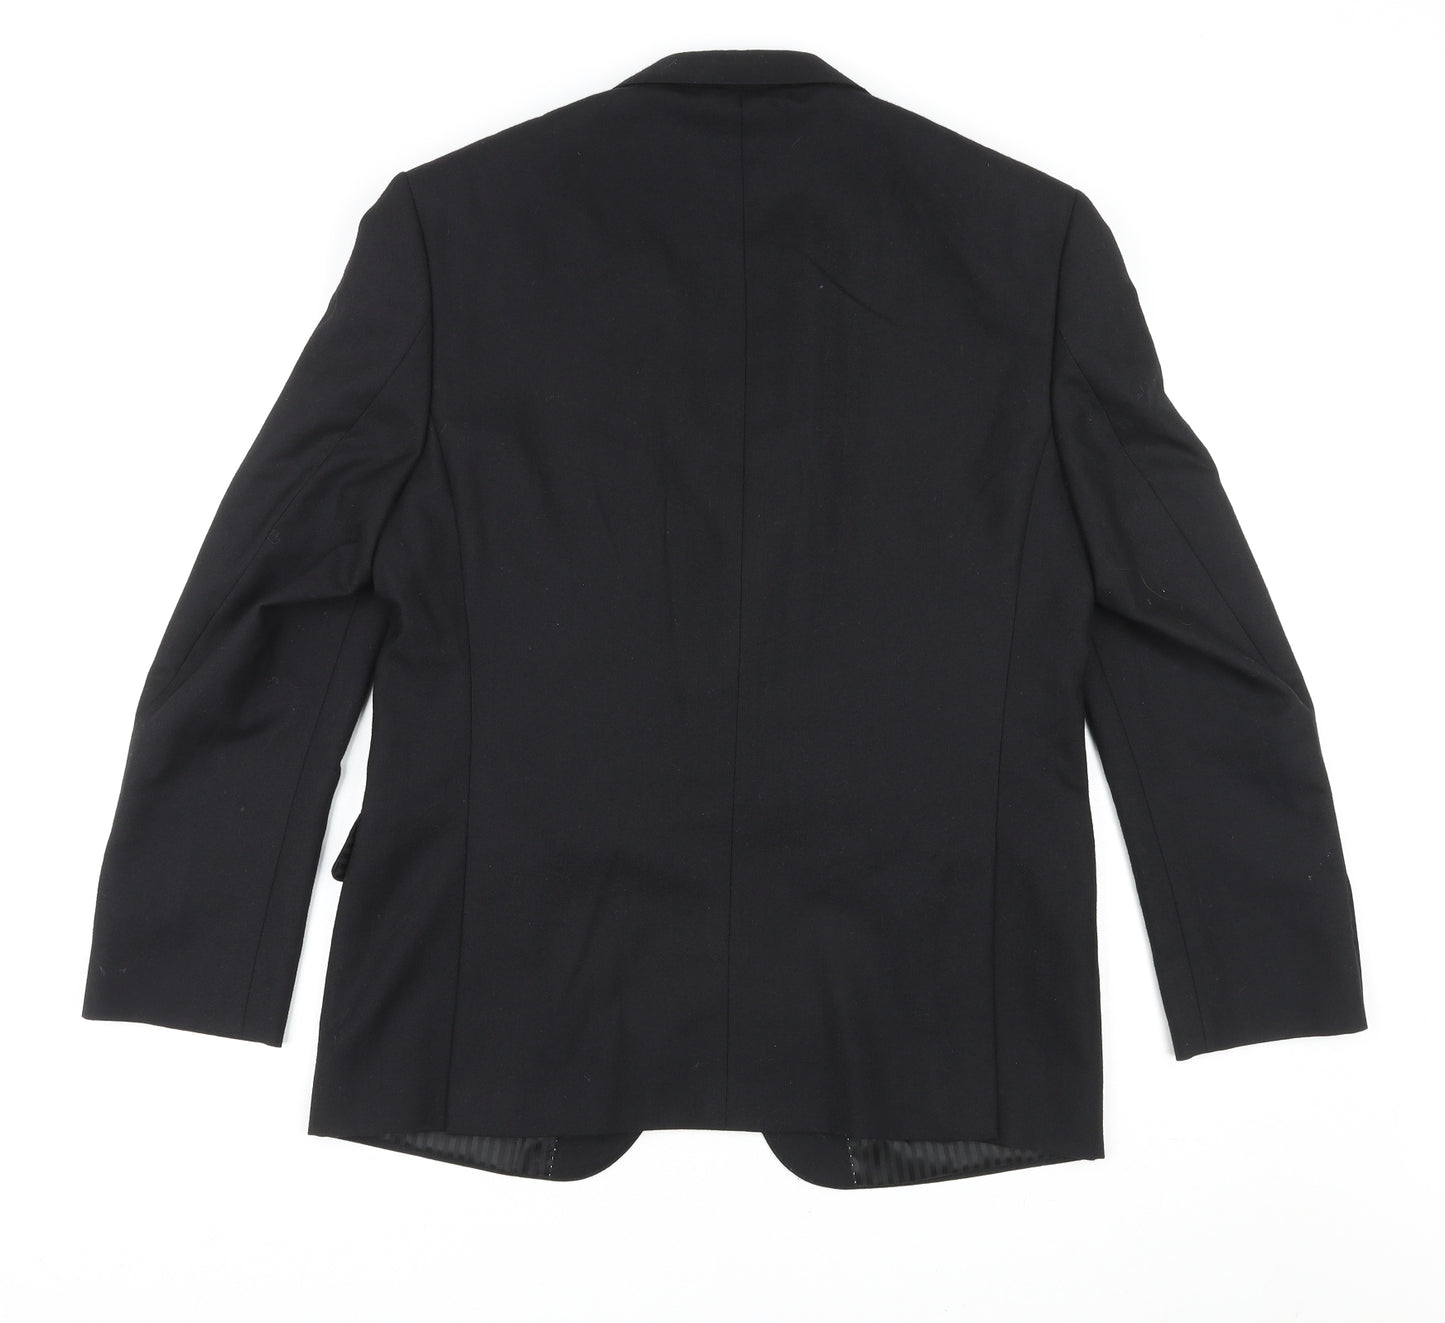 Marks and Spencer Mens Black Wool Jacket Suit Jacket Size 40 Regular - Five button sleeve